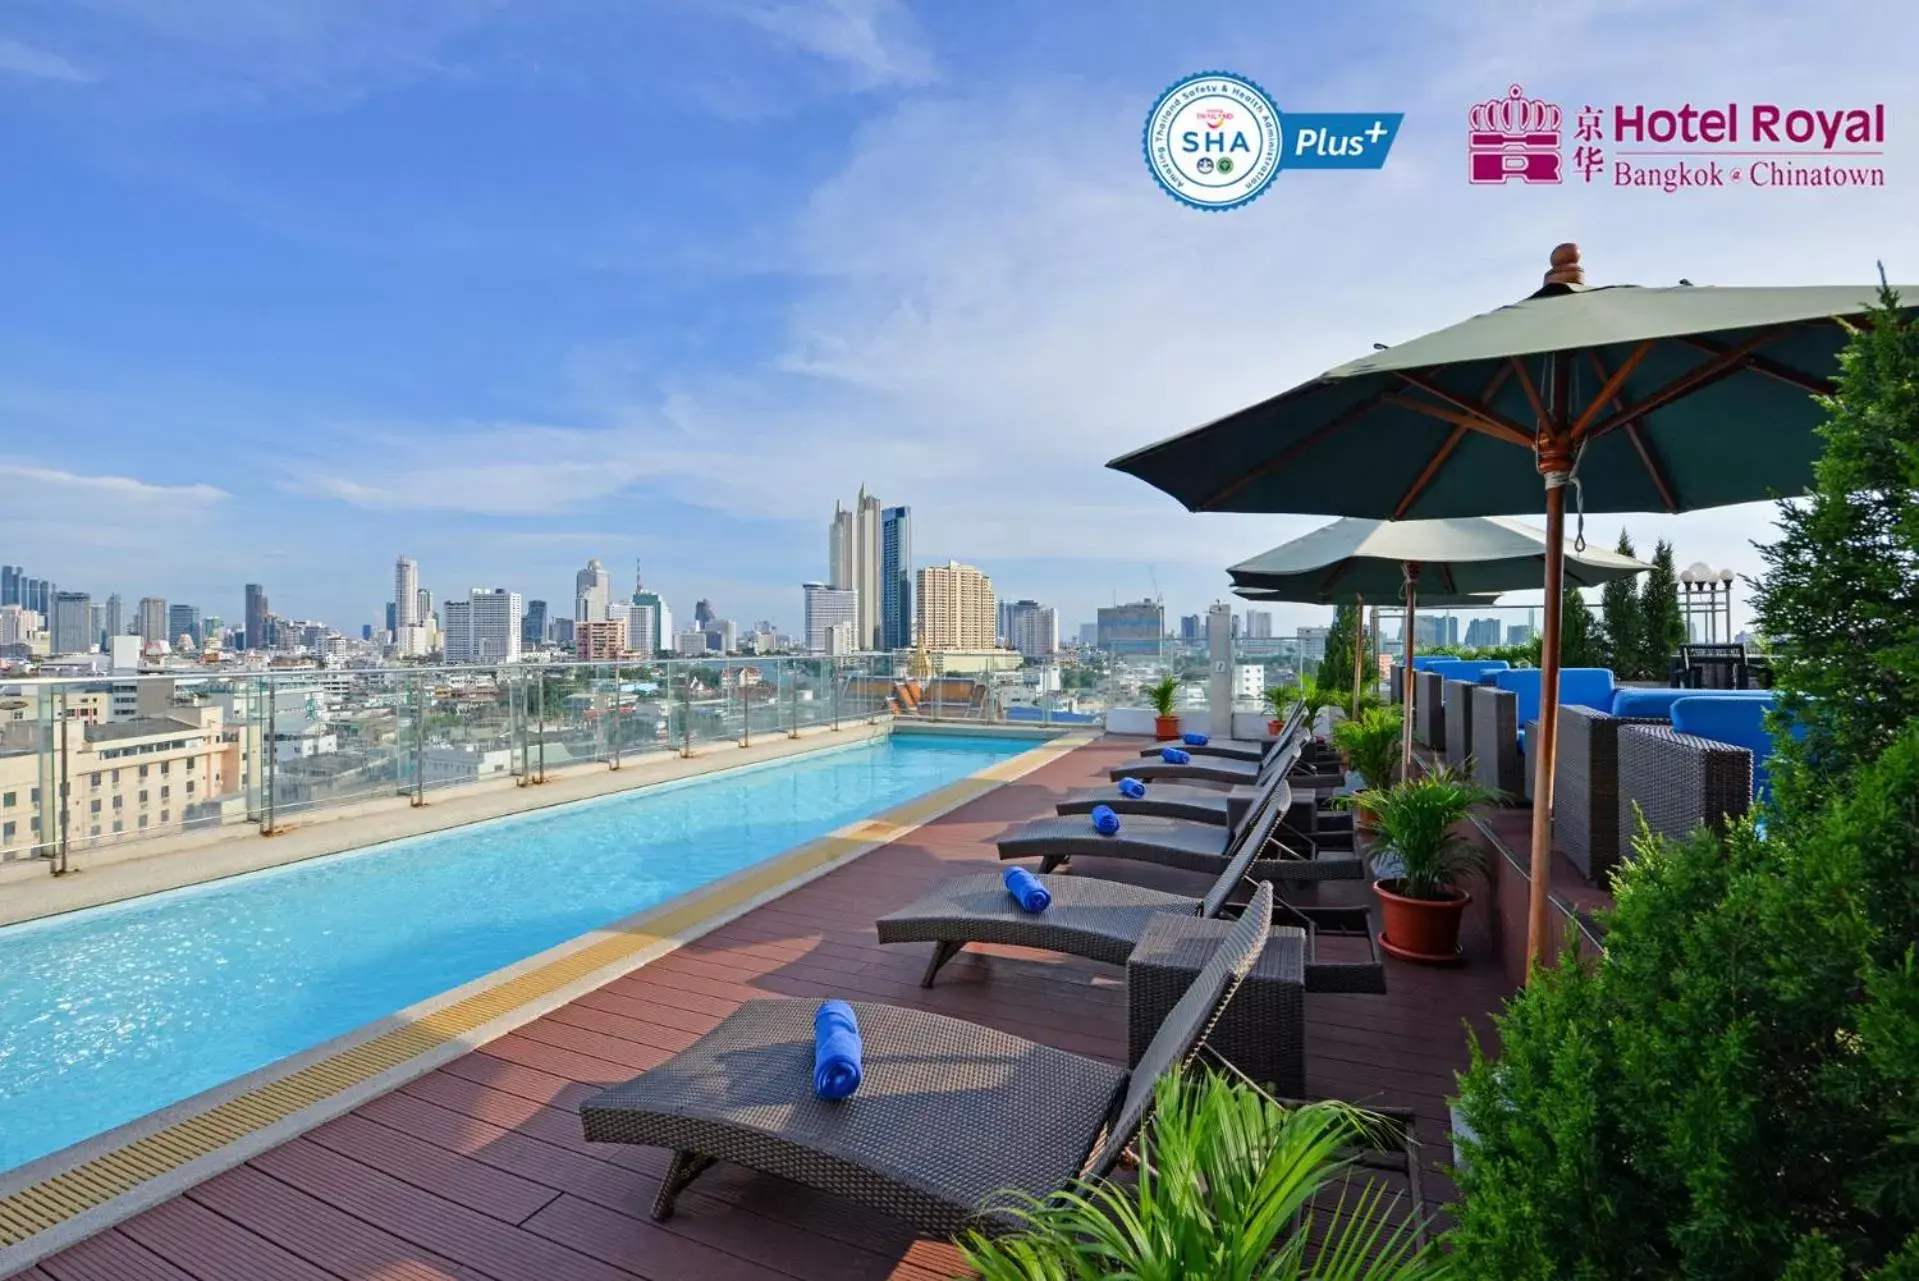 Swimming Pool in Hotel Royal Bangkok@Chinatown